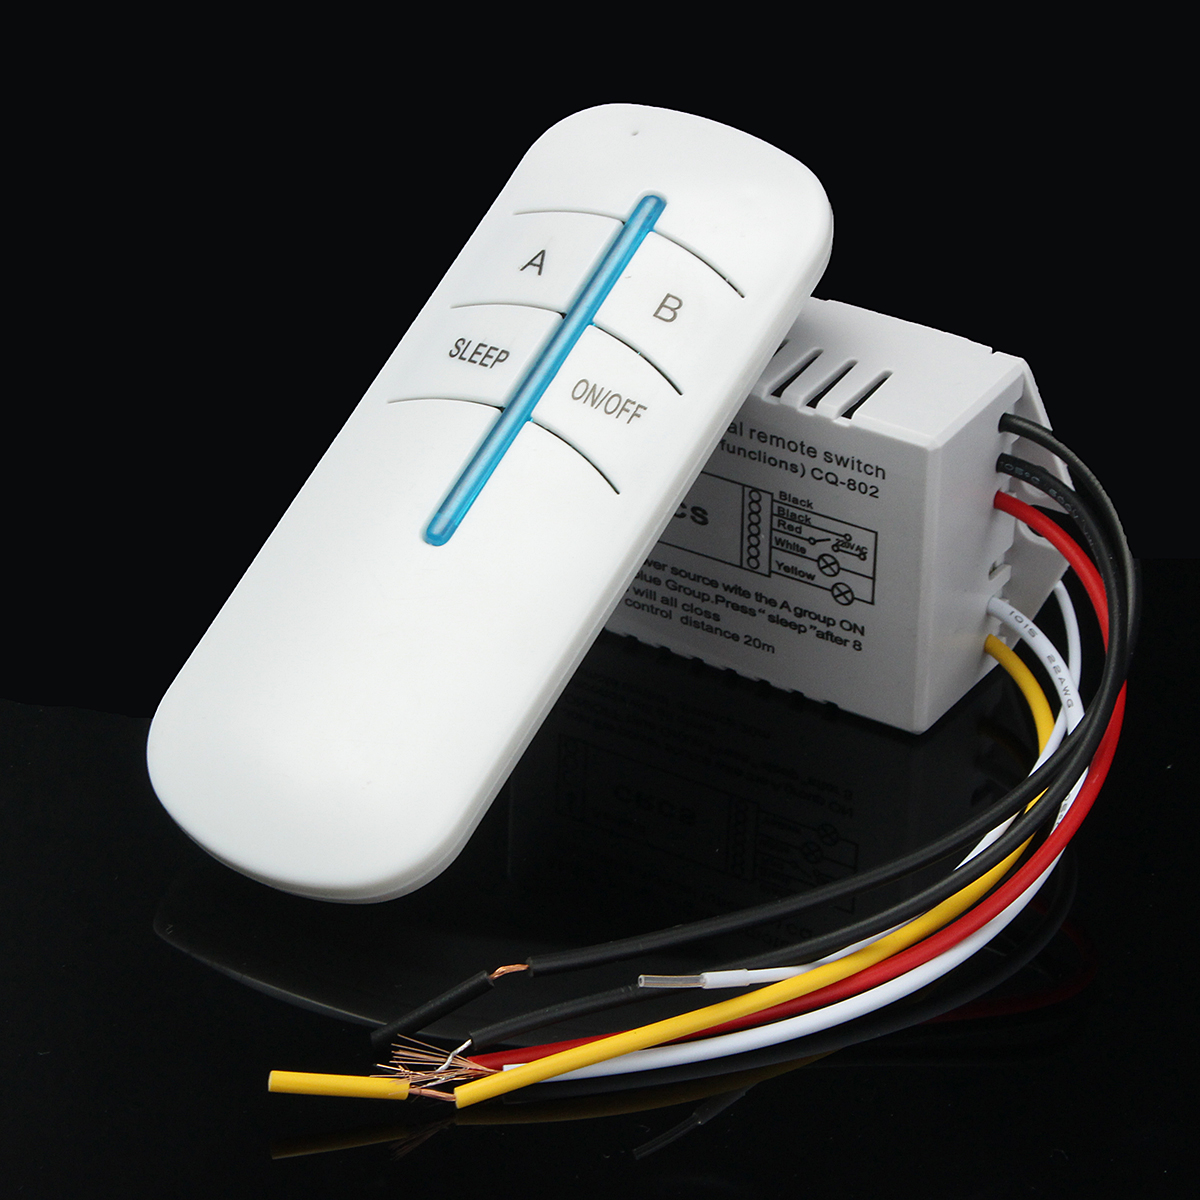 Digital Remote Control Light Switch Wireless ON OFF Remote Control